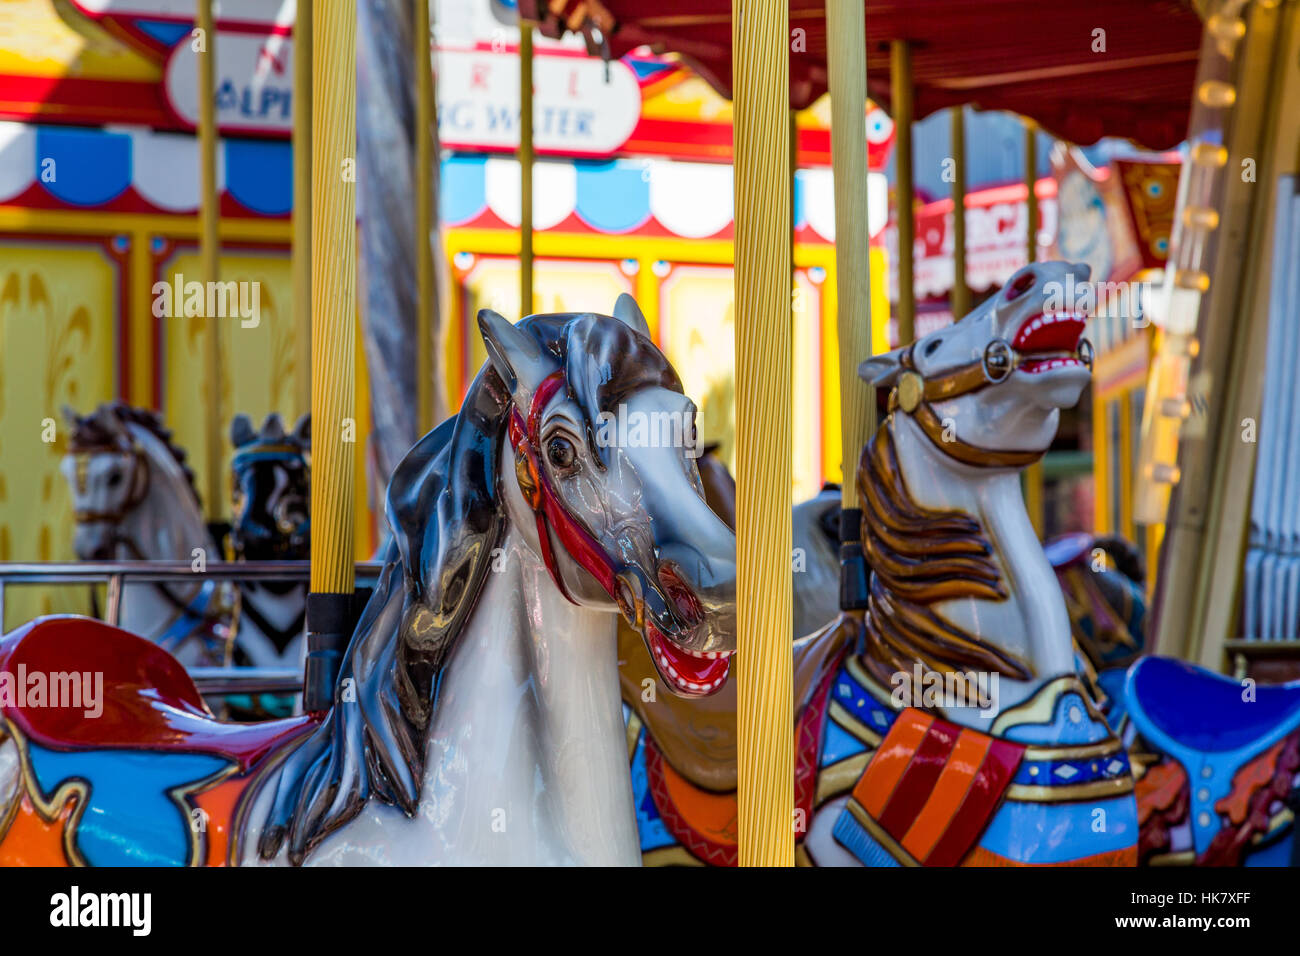 Carousel Horse at San Francisco's Pier 39 Stock Photo